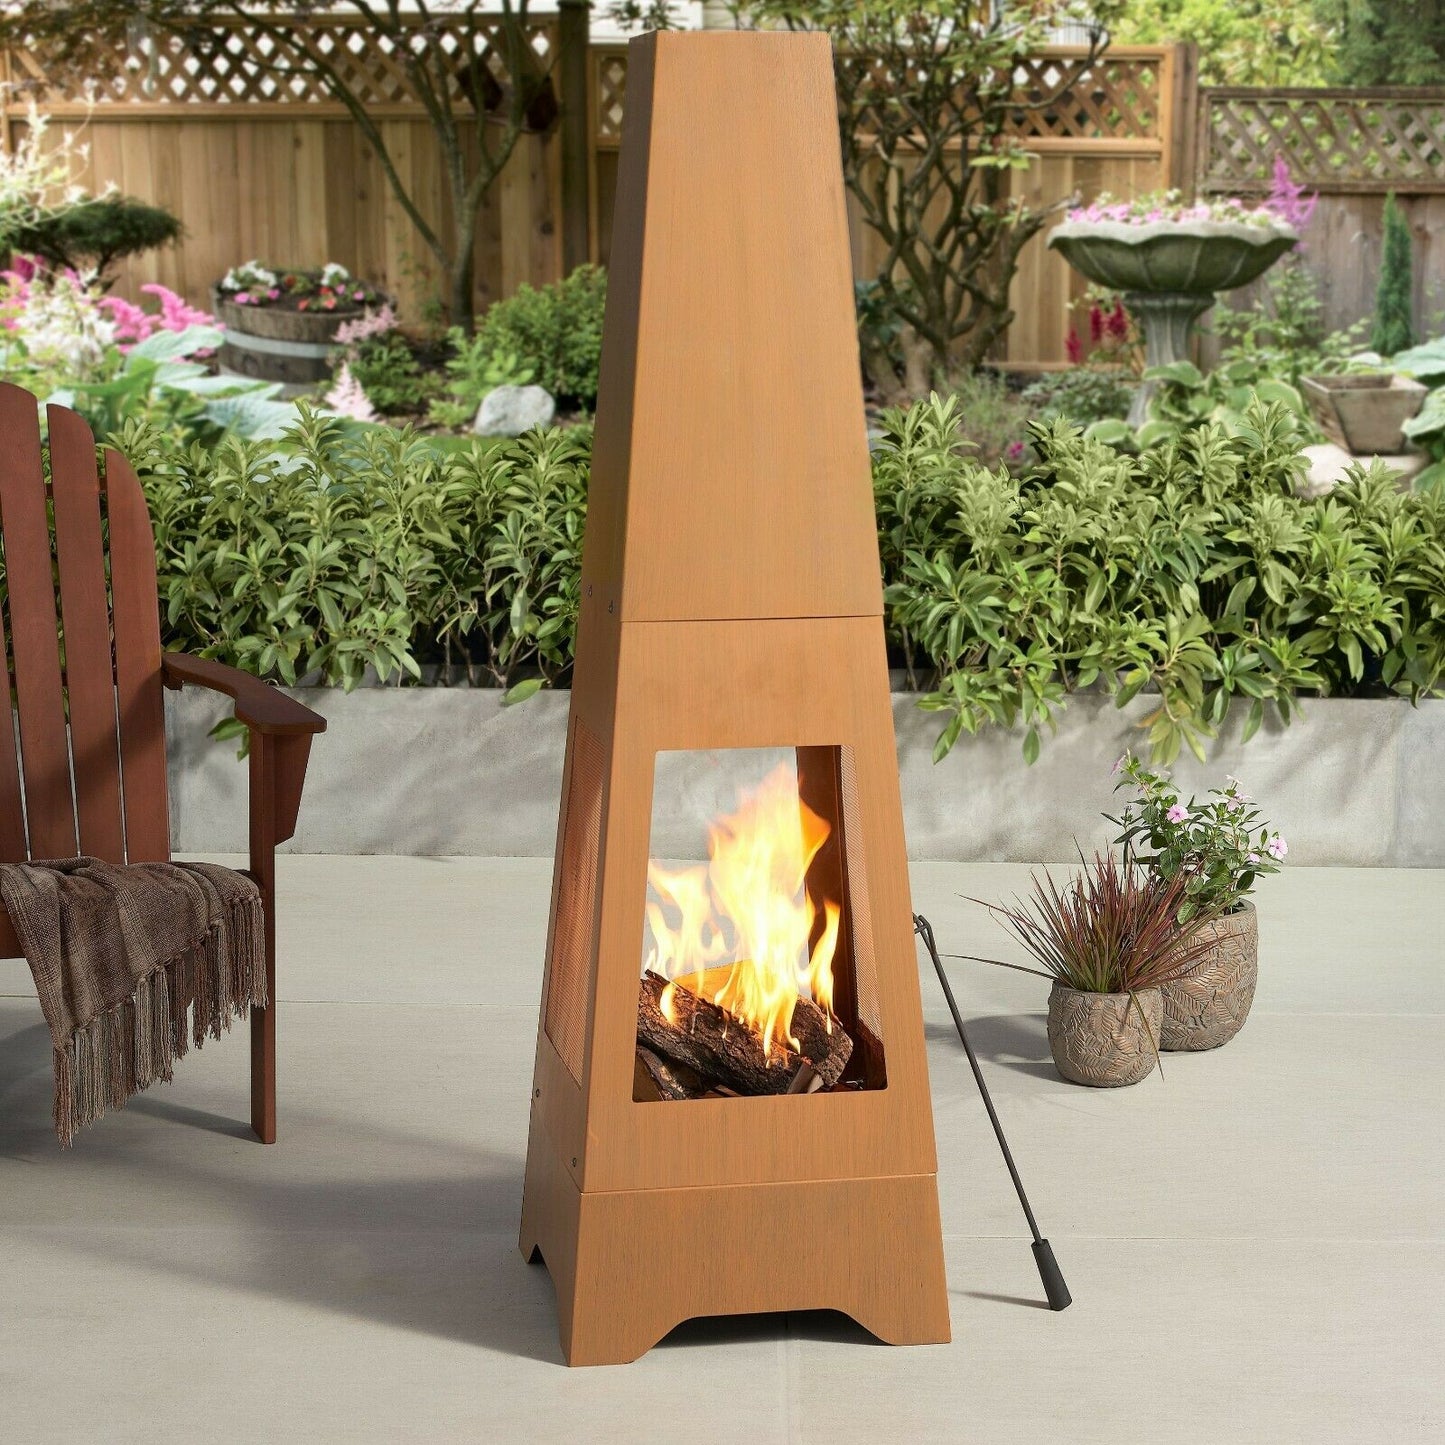 Chiminea Fireplace Outdoor - Patio Fire Pit Wood Burning Heater Steel - Yard Garden Fireplace